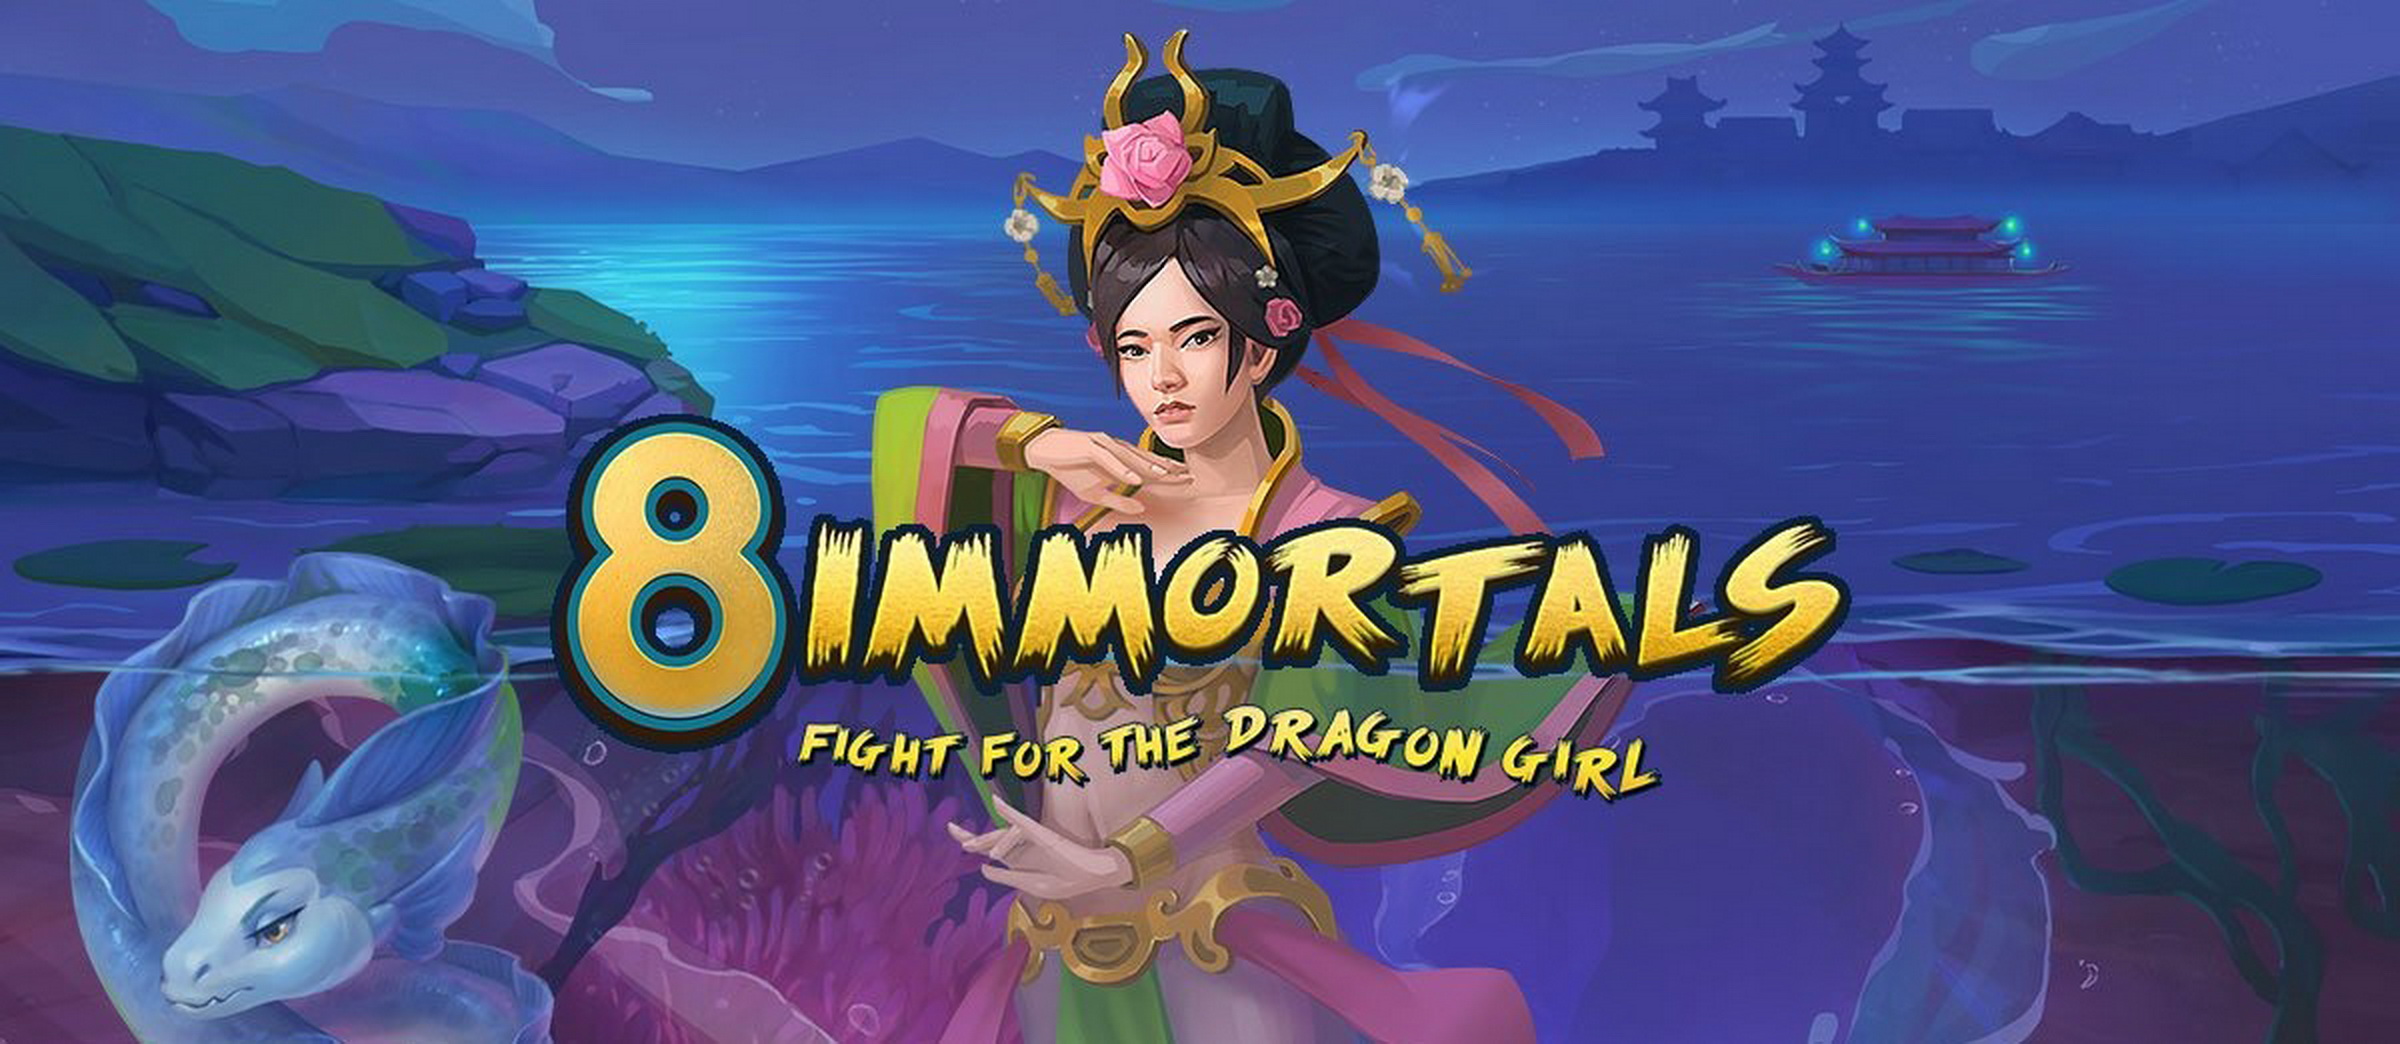 8 Immortals Fight For The Dragon Girl demo